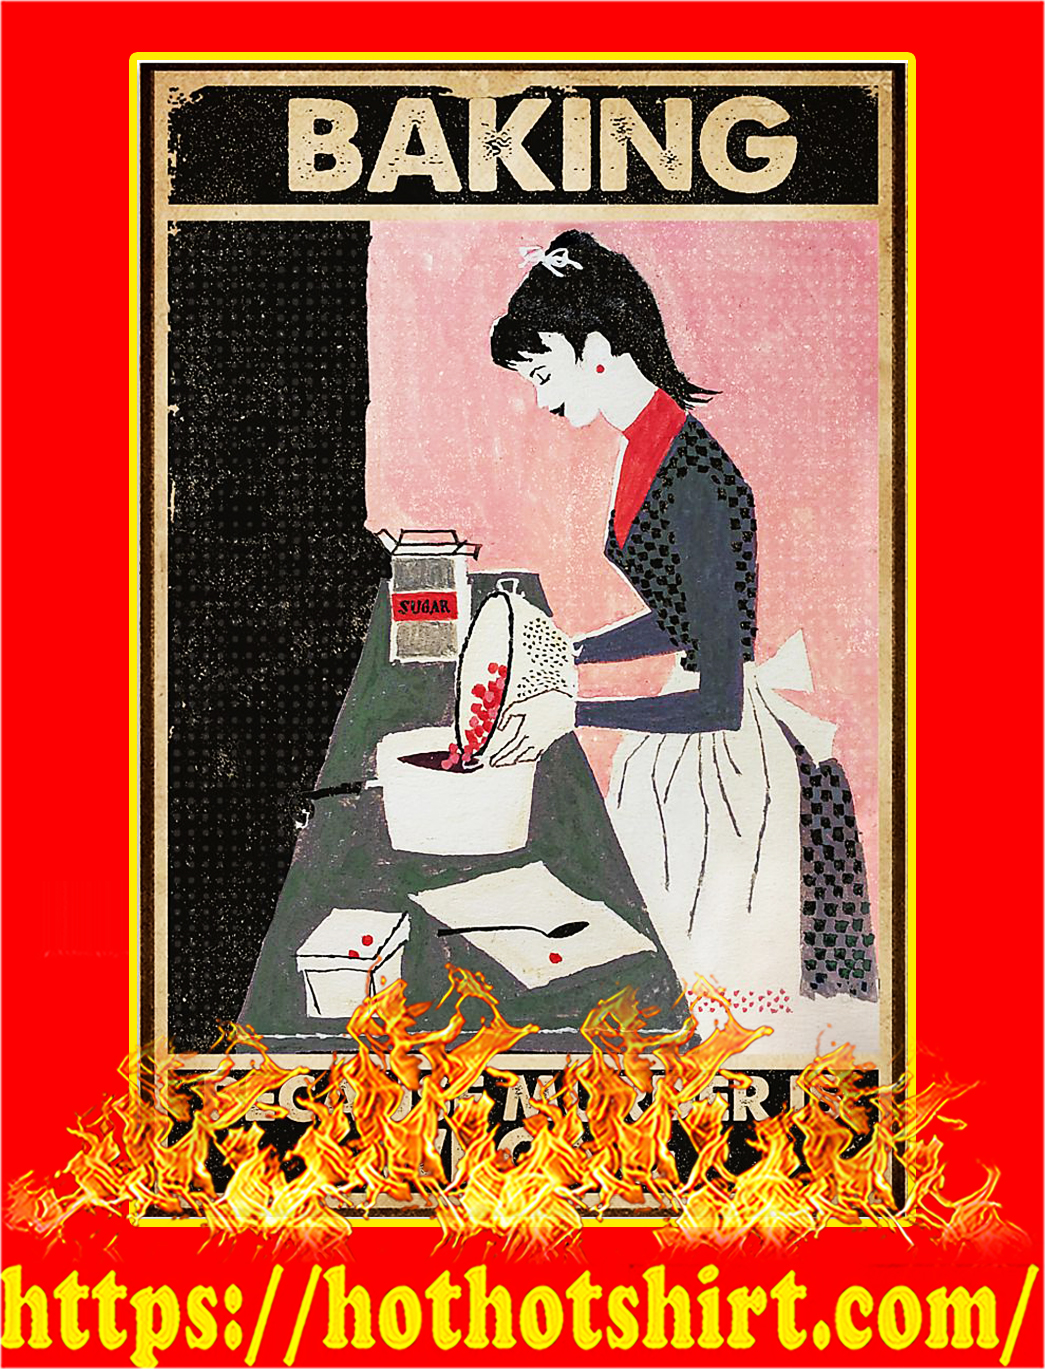 Baking because muder is wrong poster